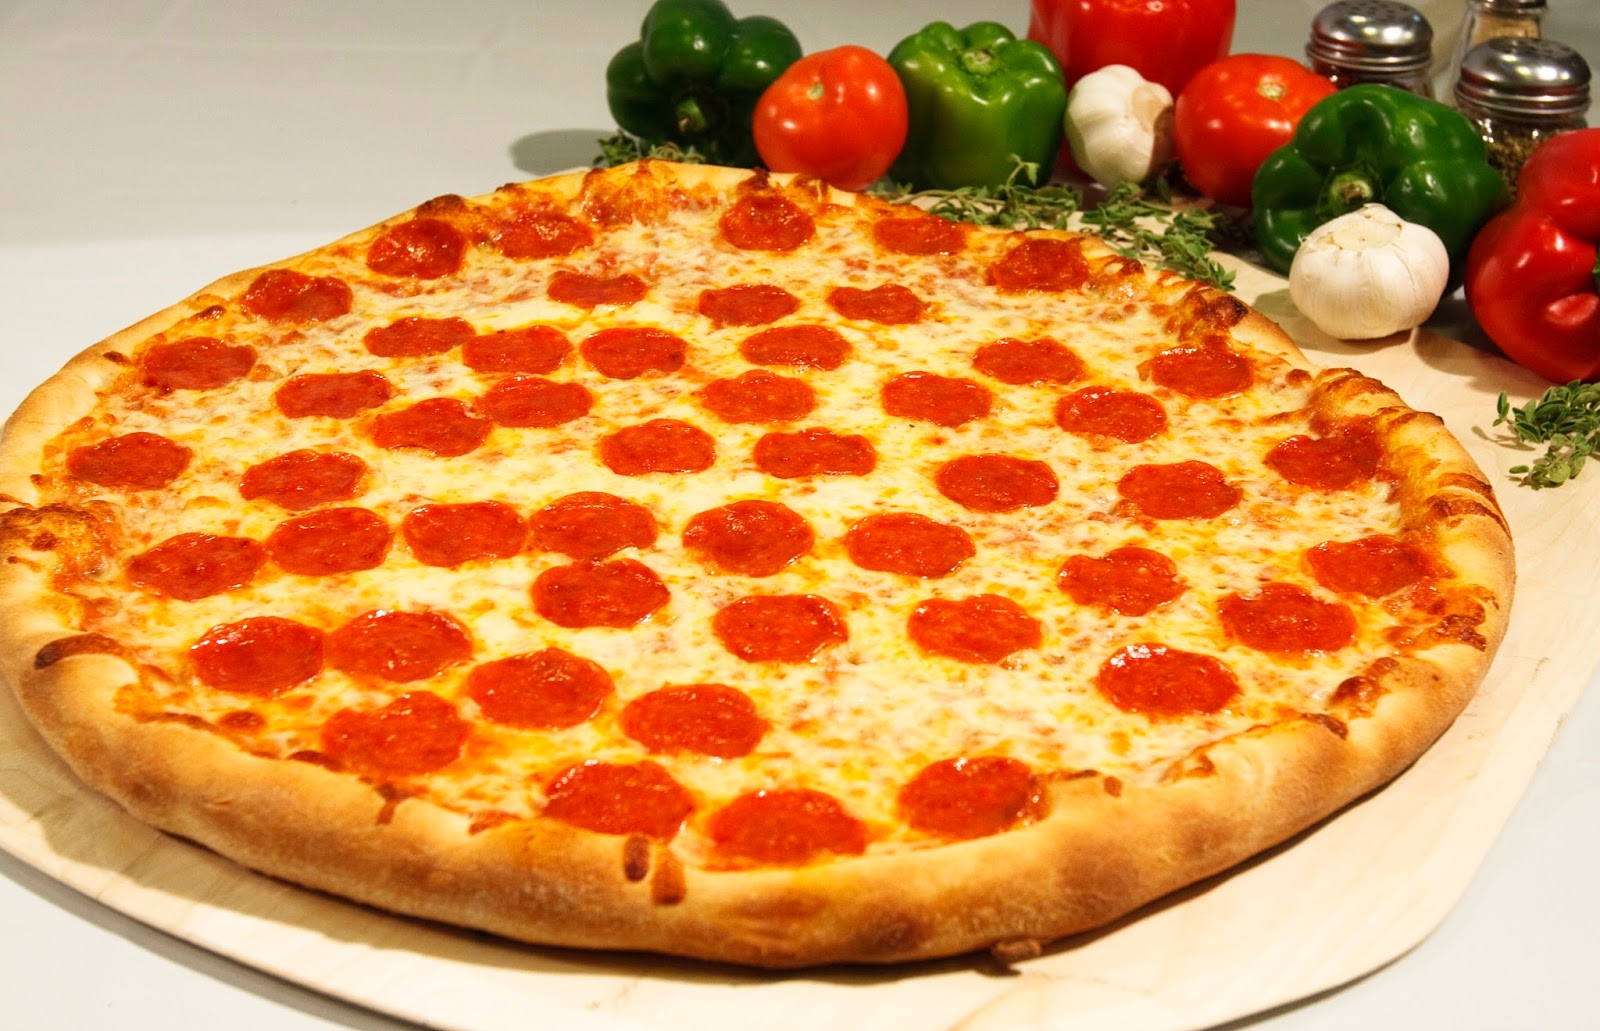 BODYBOARDING 101: NATIONAL PEPPERONI PIZZA DAY (US)